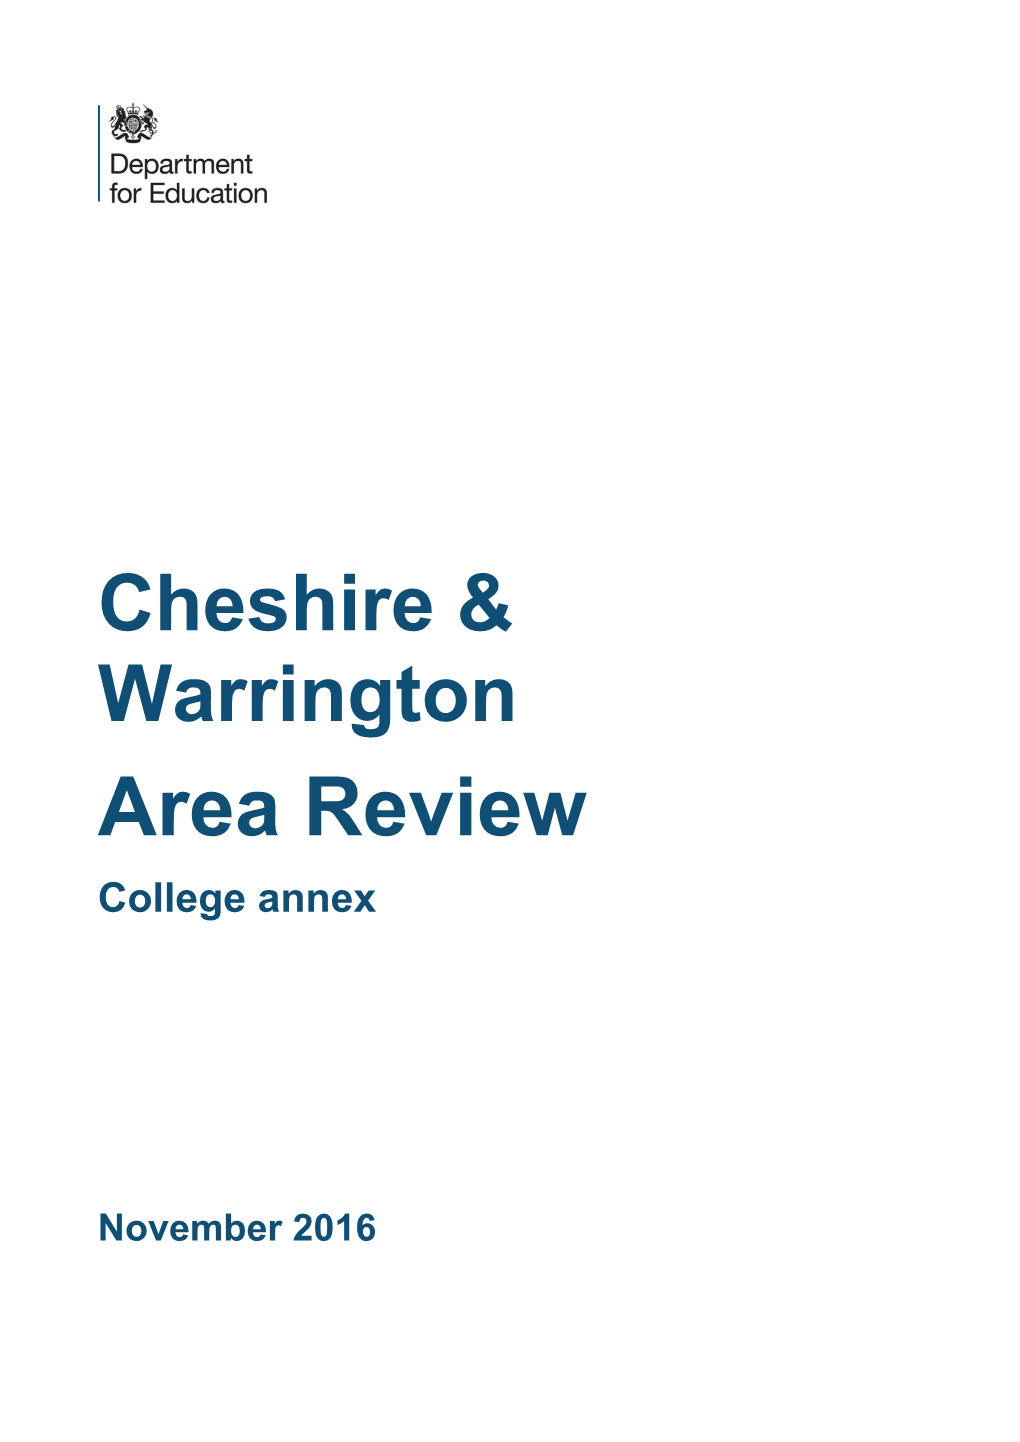 Cheshire & Warrington Area Review